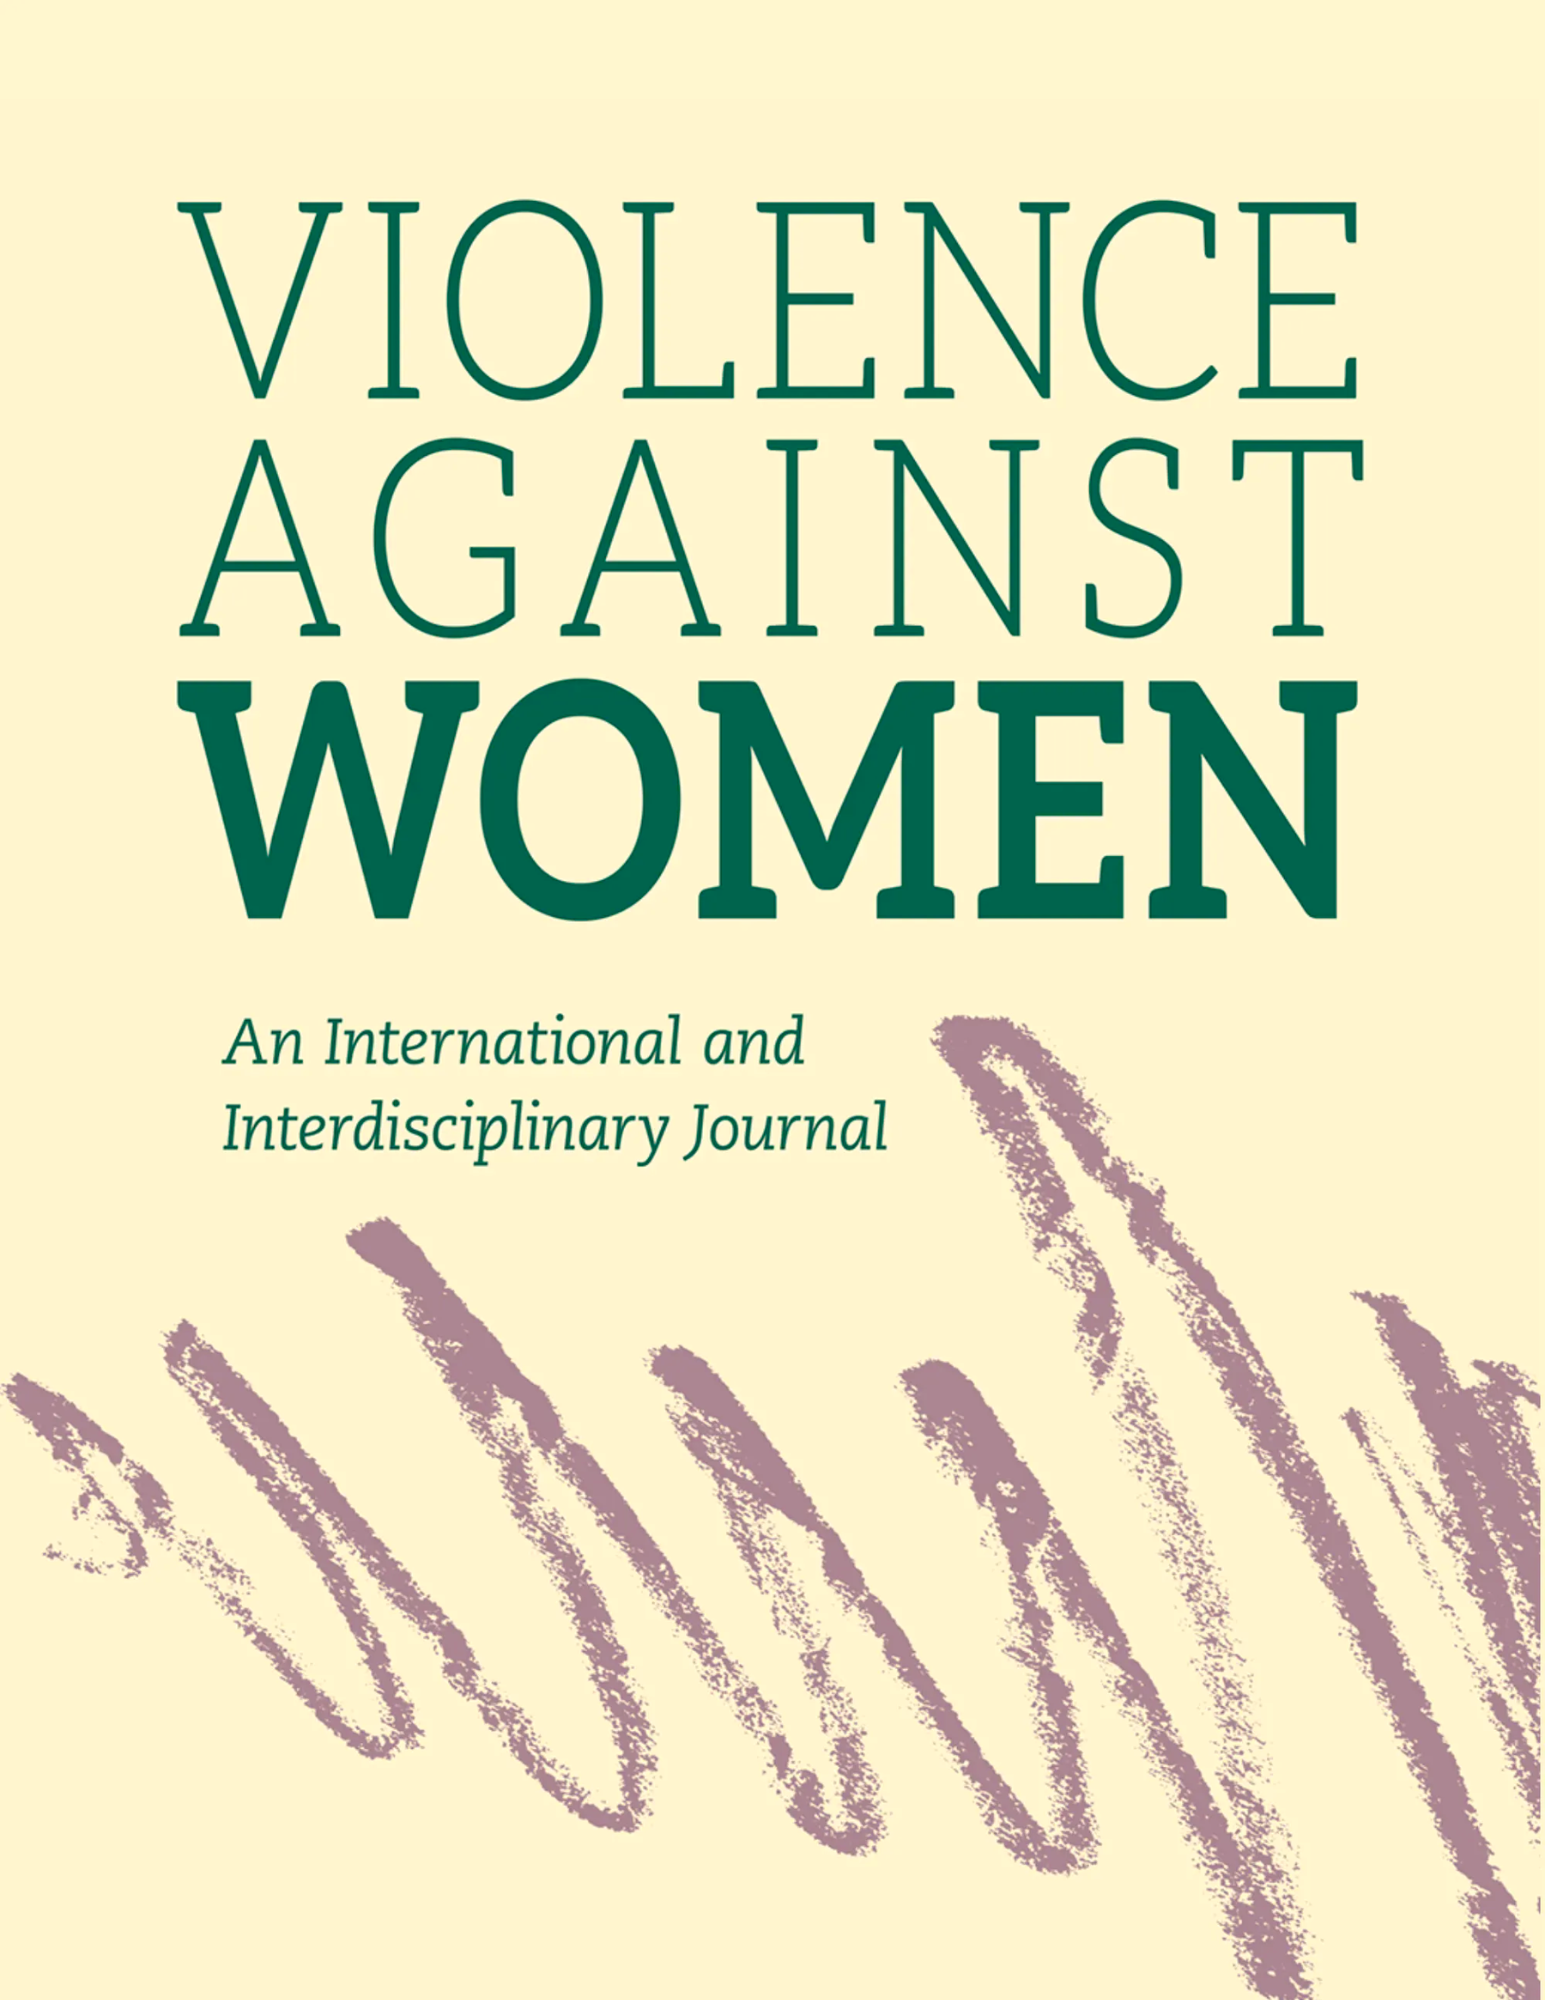 Violence against women journal